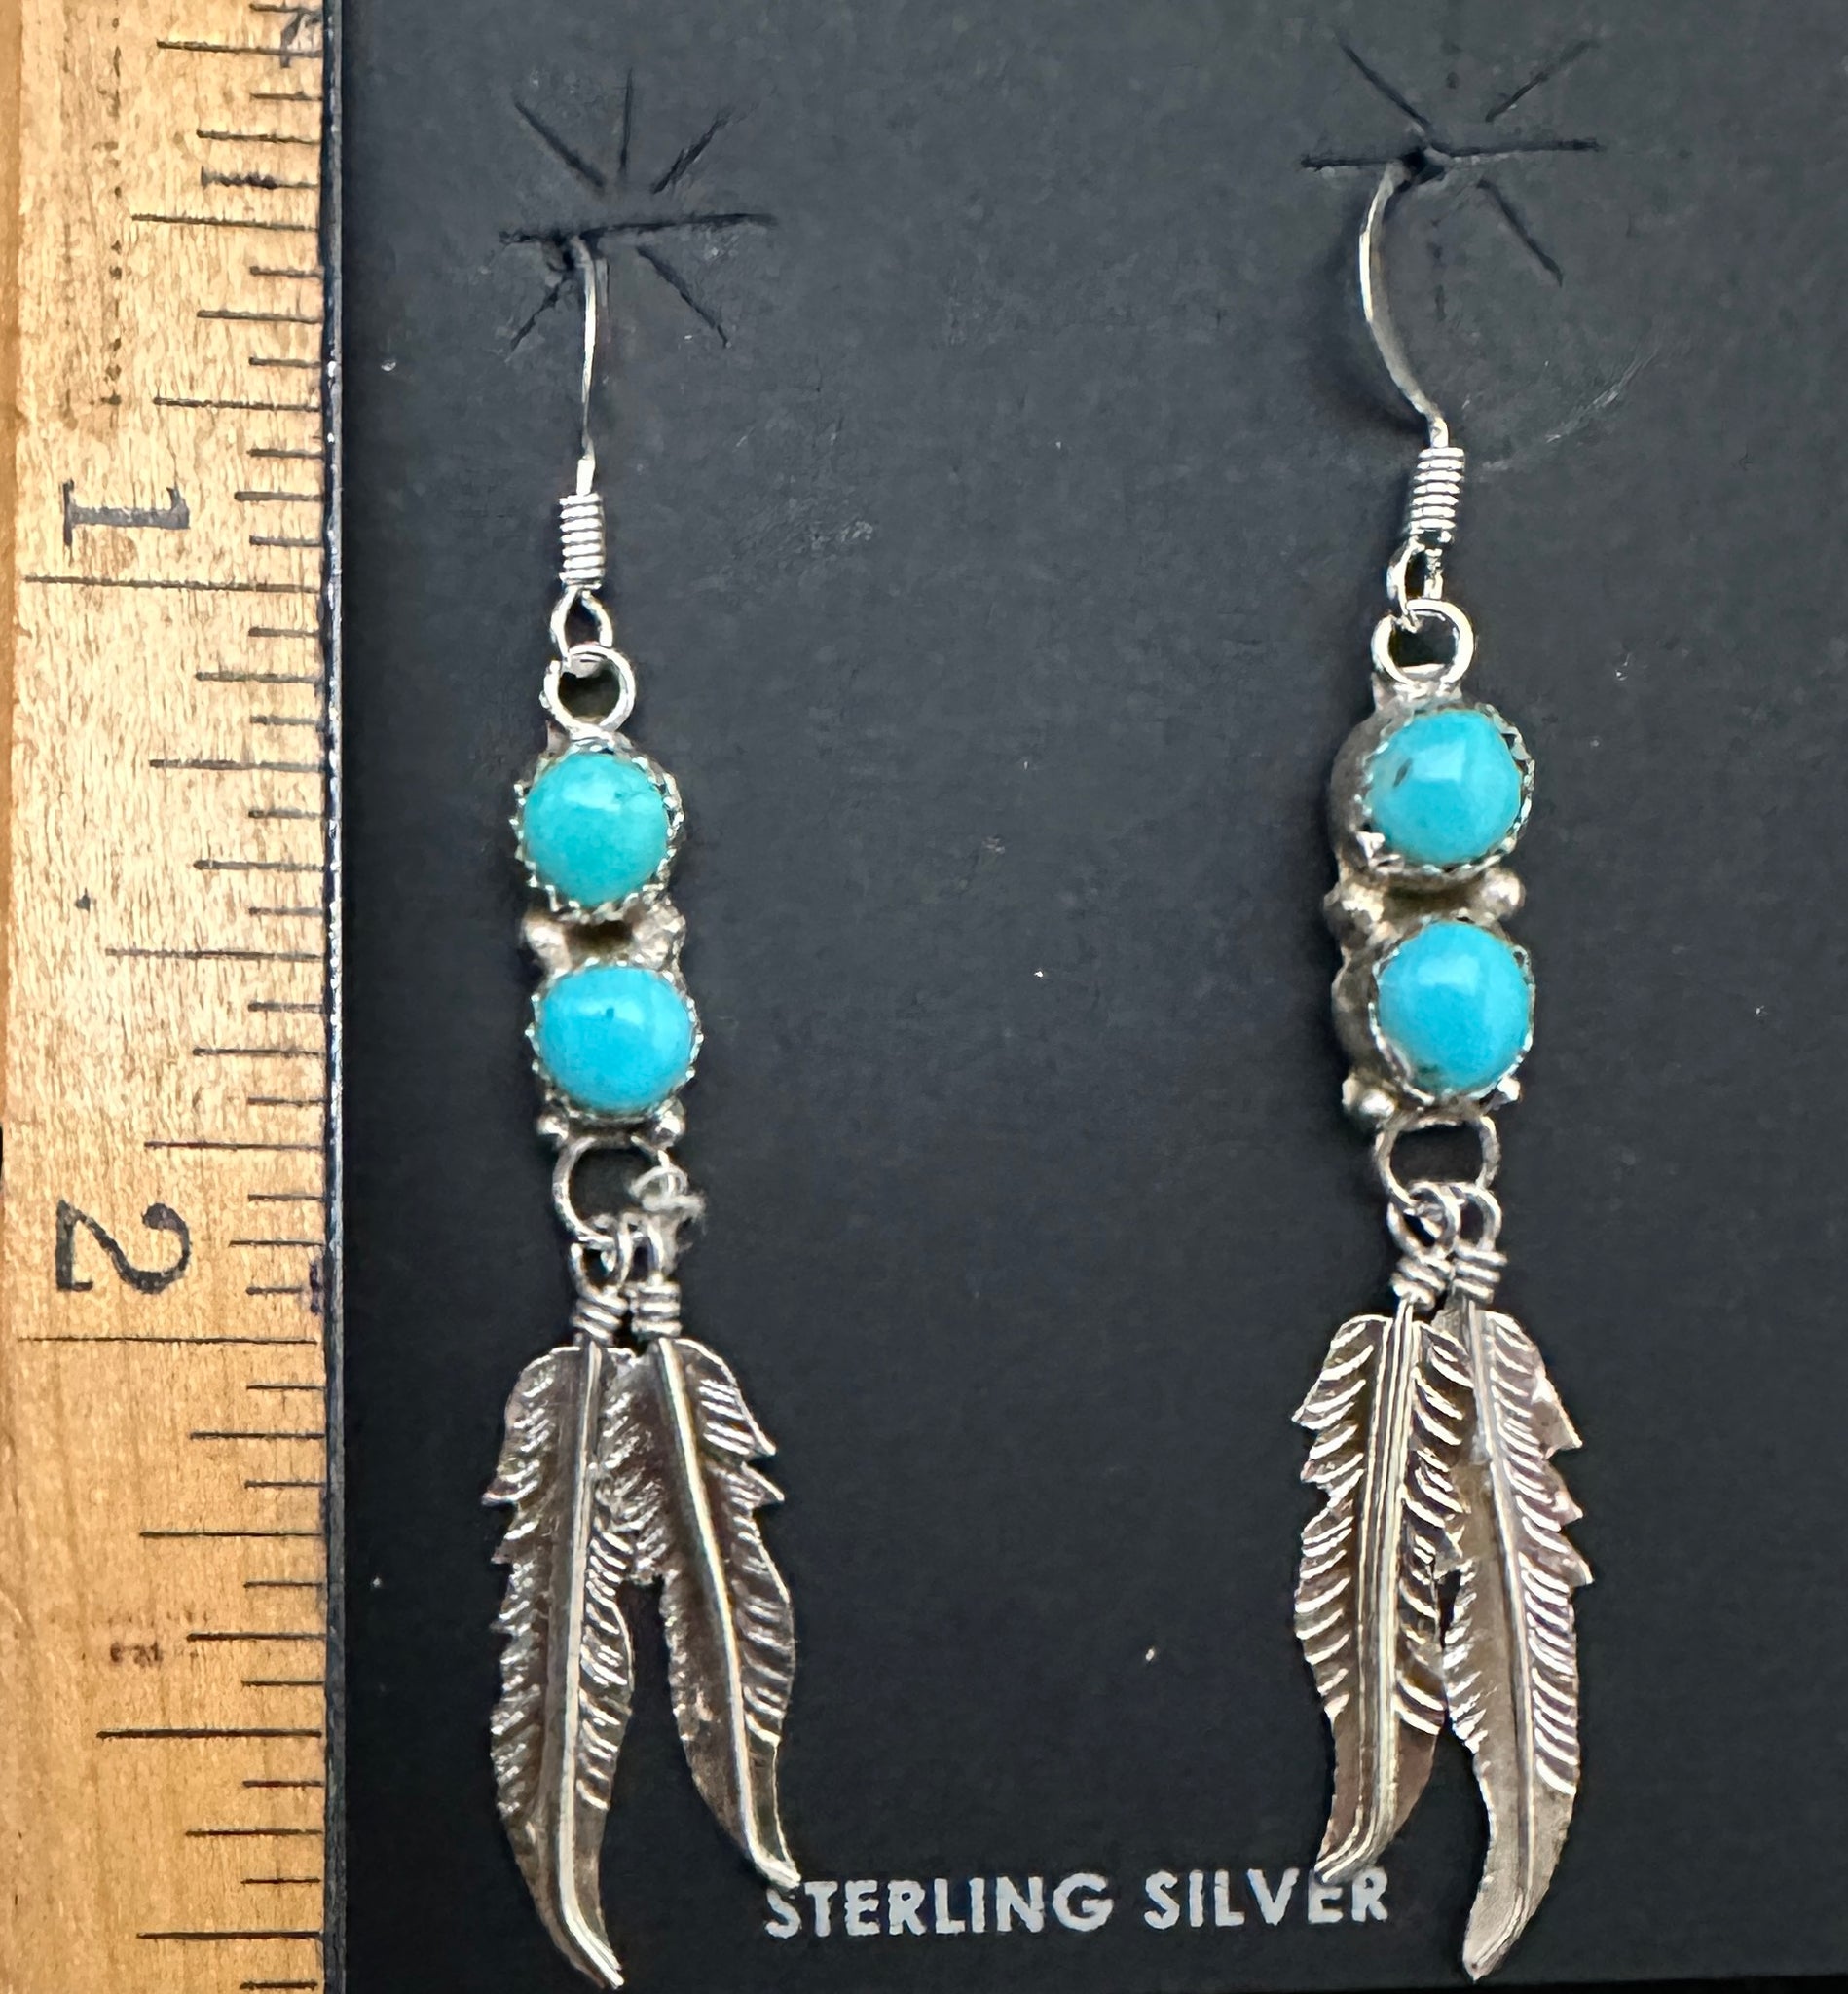 Handmade Sterling Silver Feather Earrings